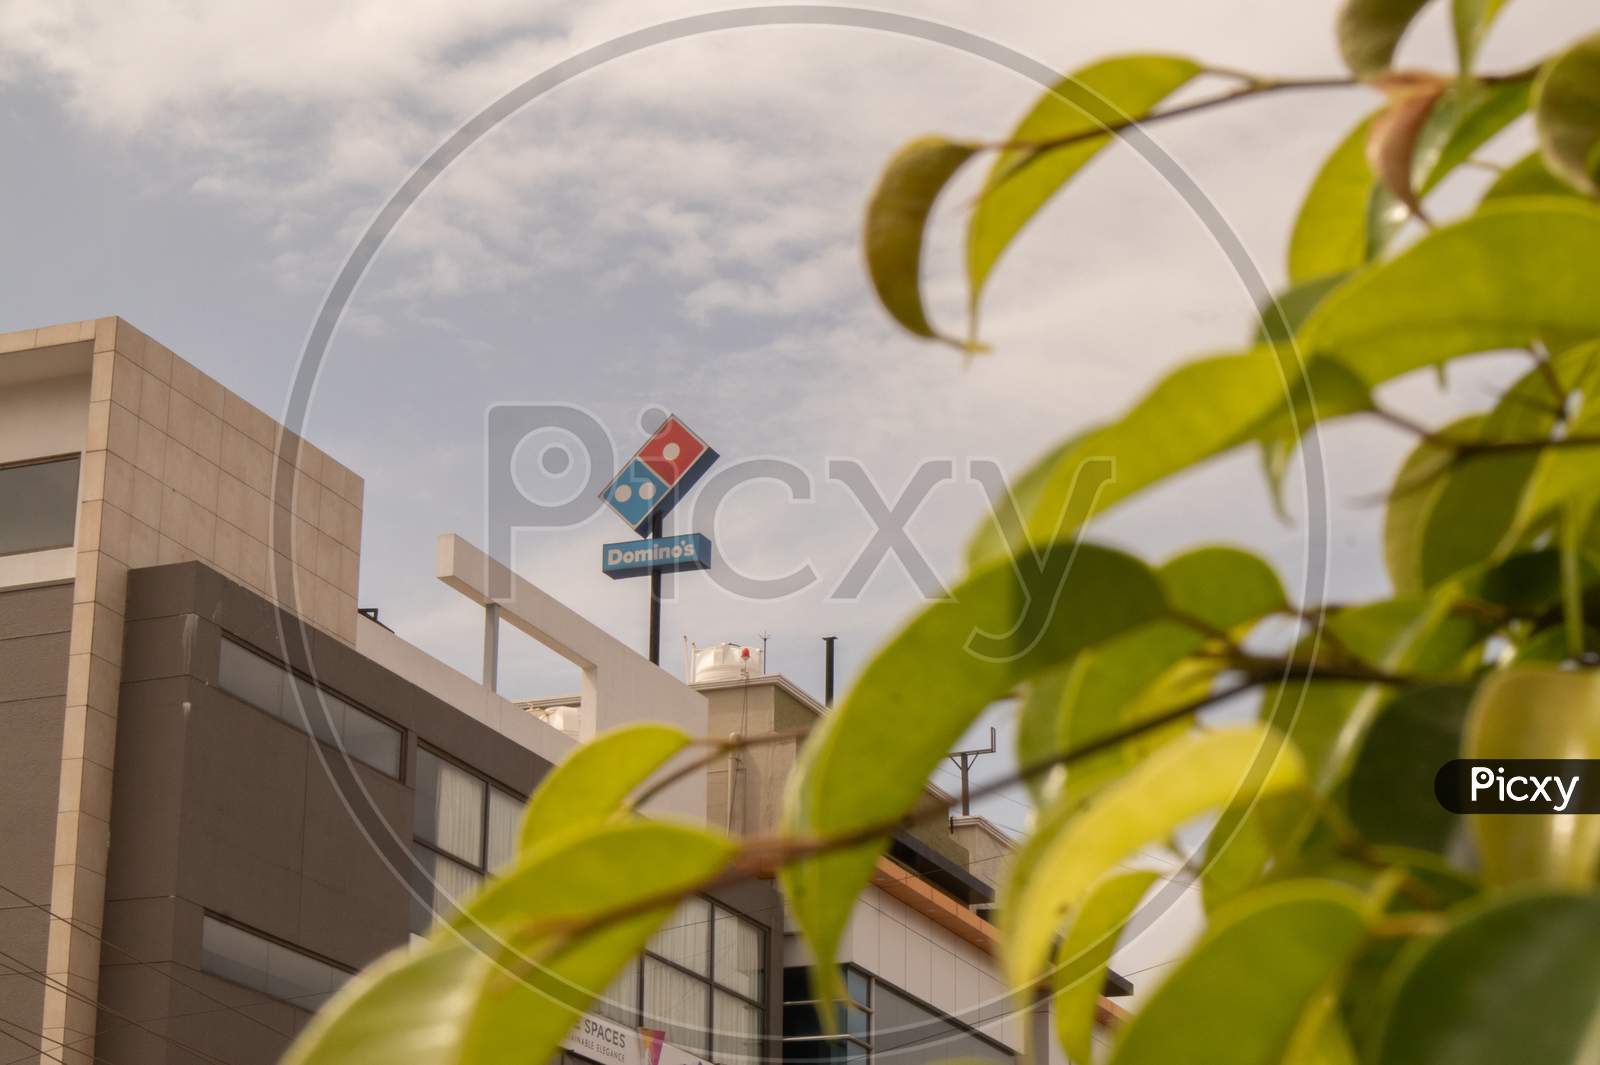 Bengaluru, India June 27,2019 : Domino'S Pizza Billboard On Top Of The Building At Bengaluru.